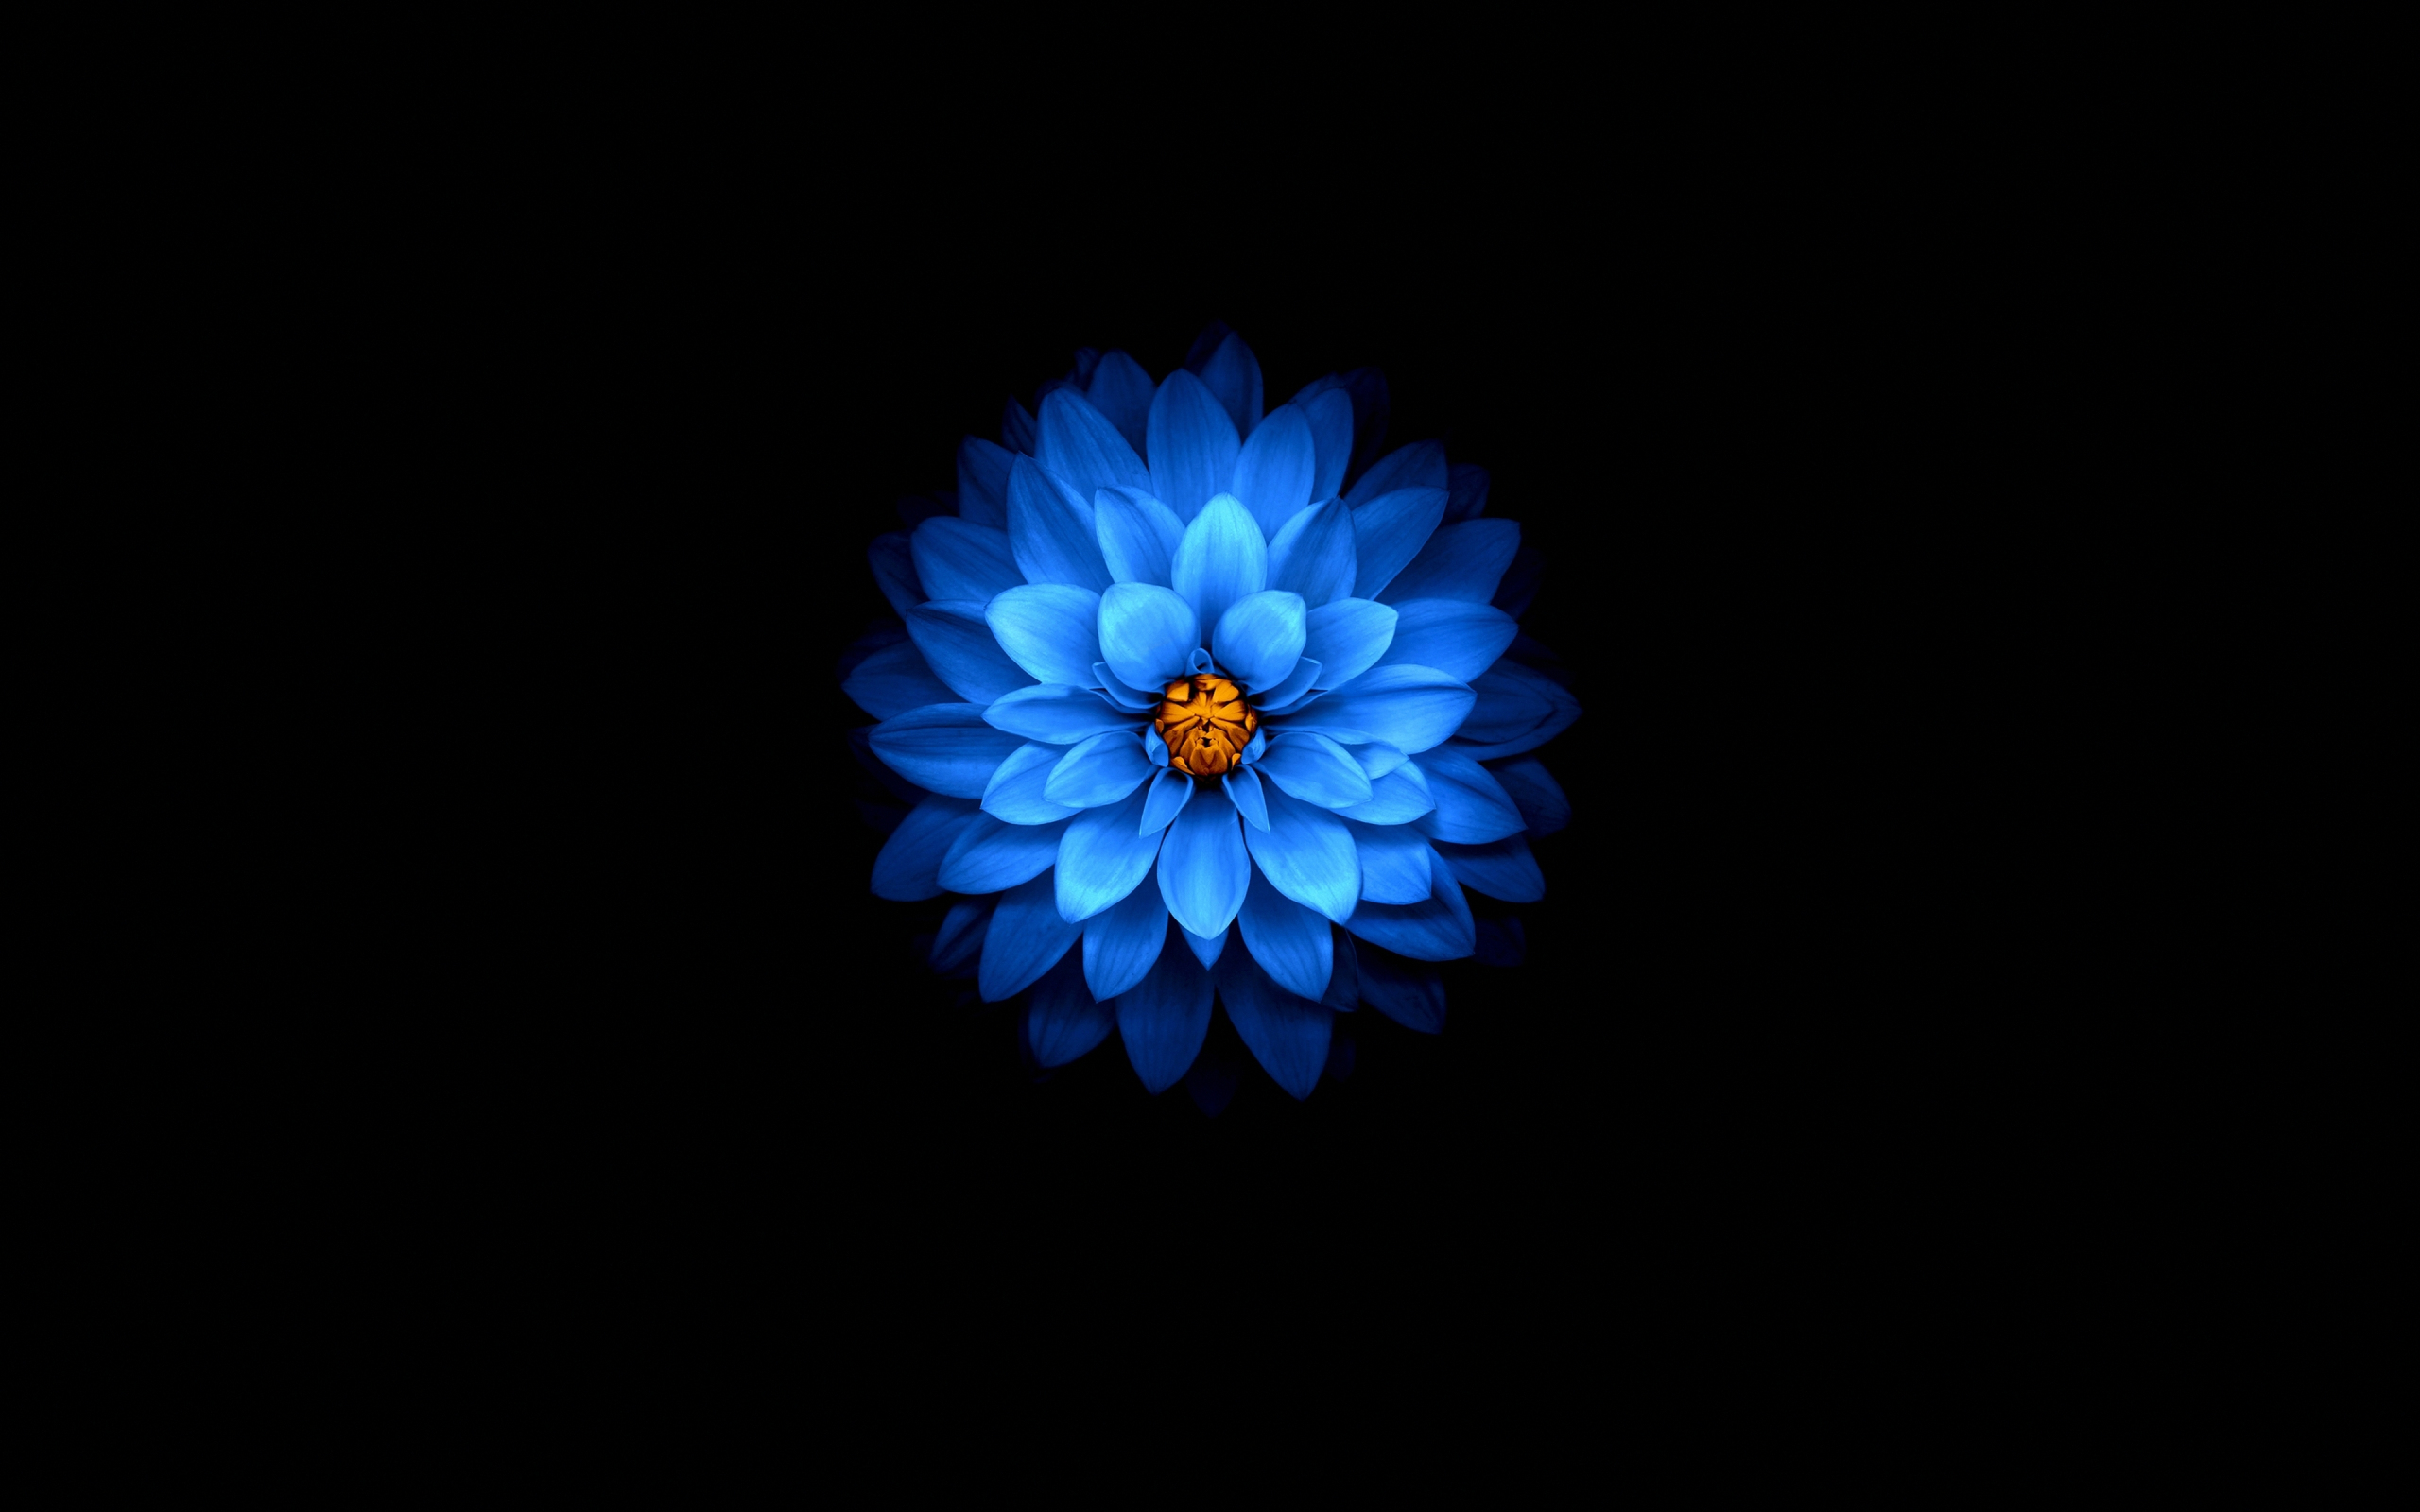 Download wallpaper 2560x1600 blue flower, dark, amoled, dual wide 16:10 2560x1600 HD background, 25964